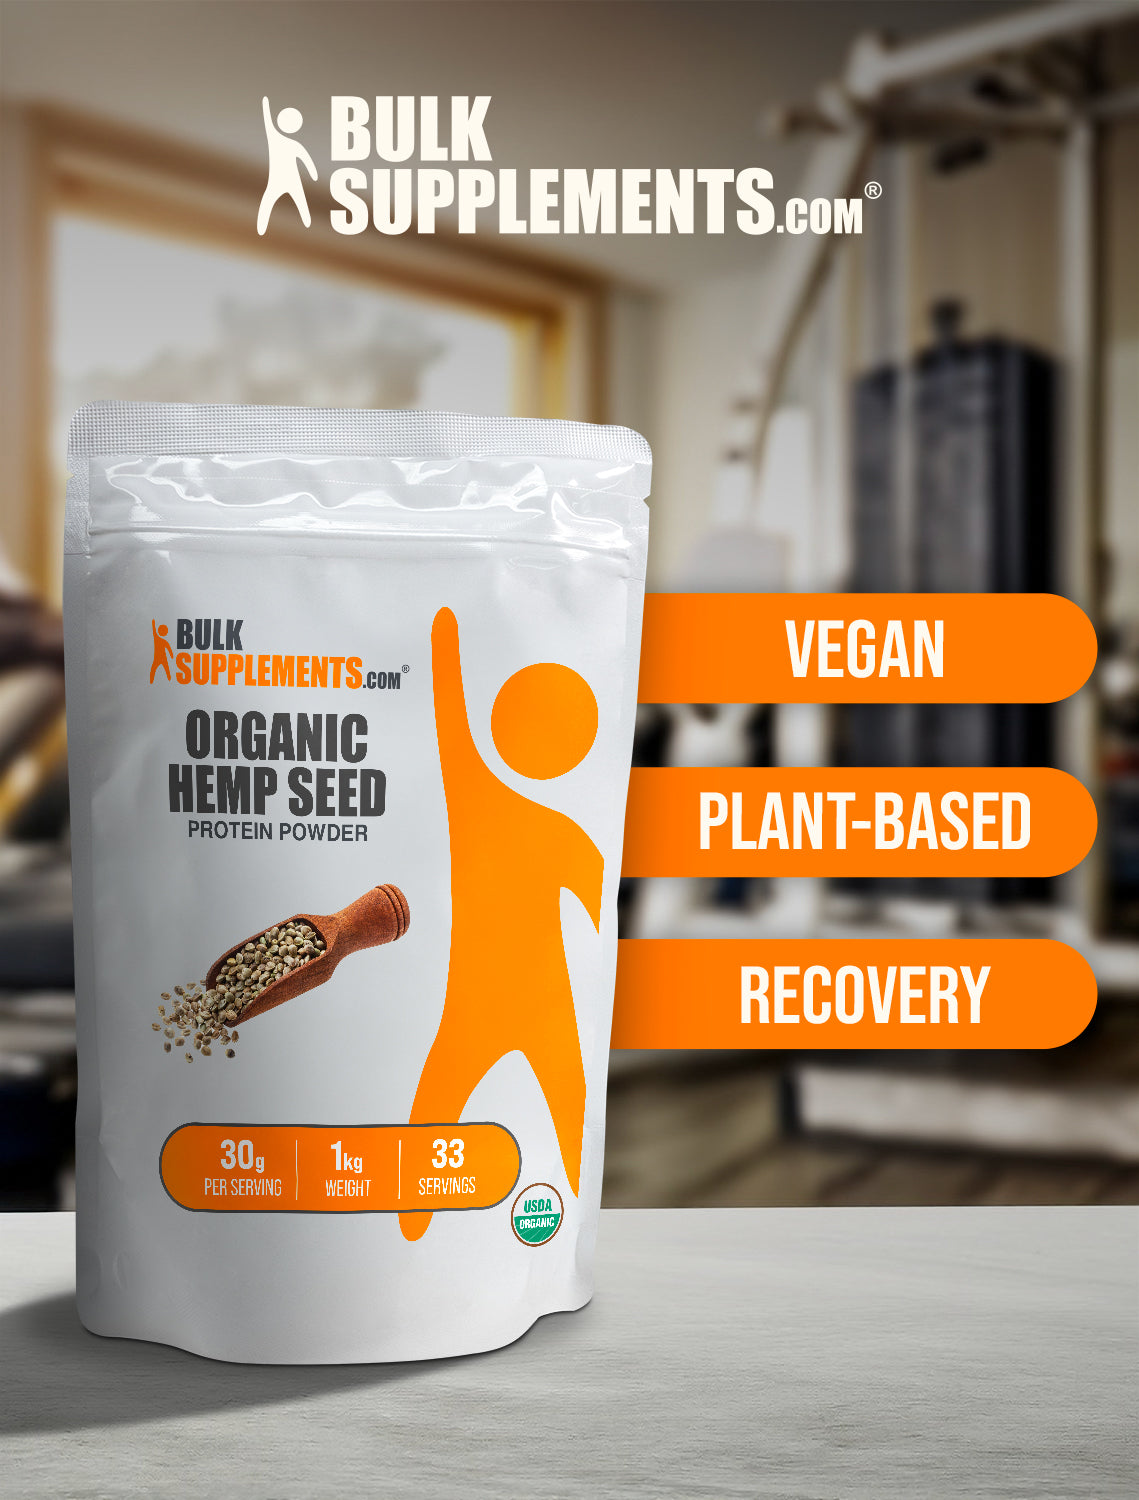 Organic hemp seed protein powder keyword image 1kg